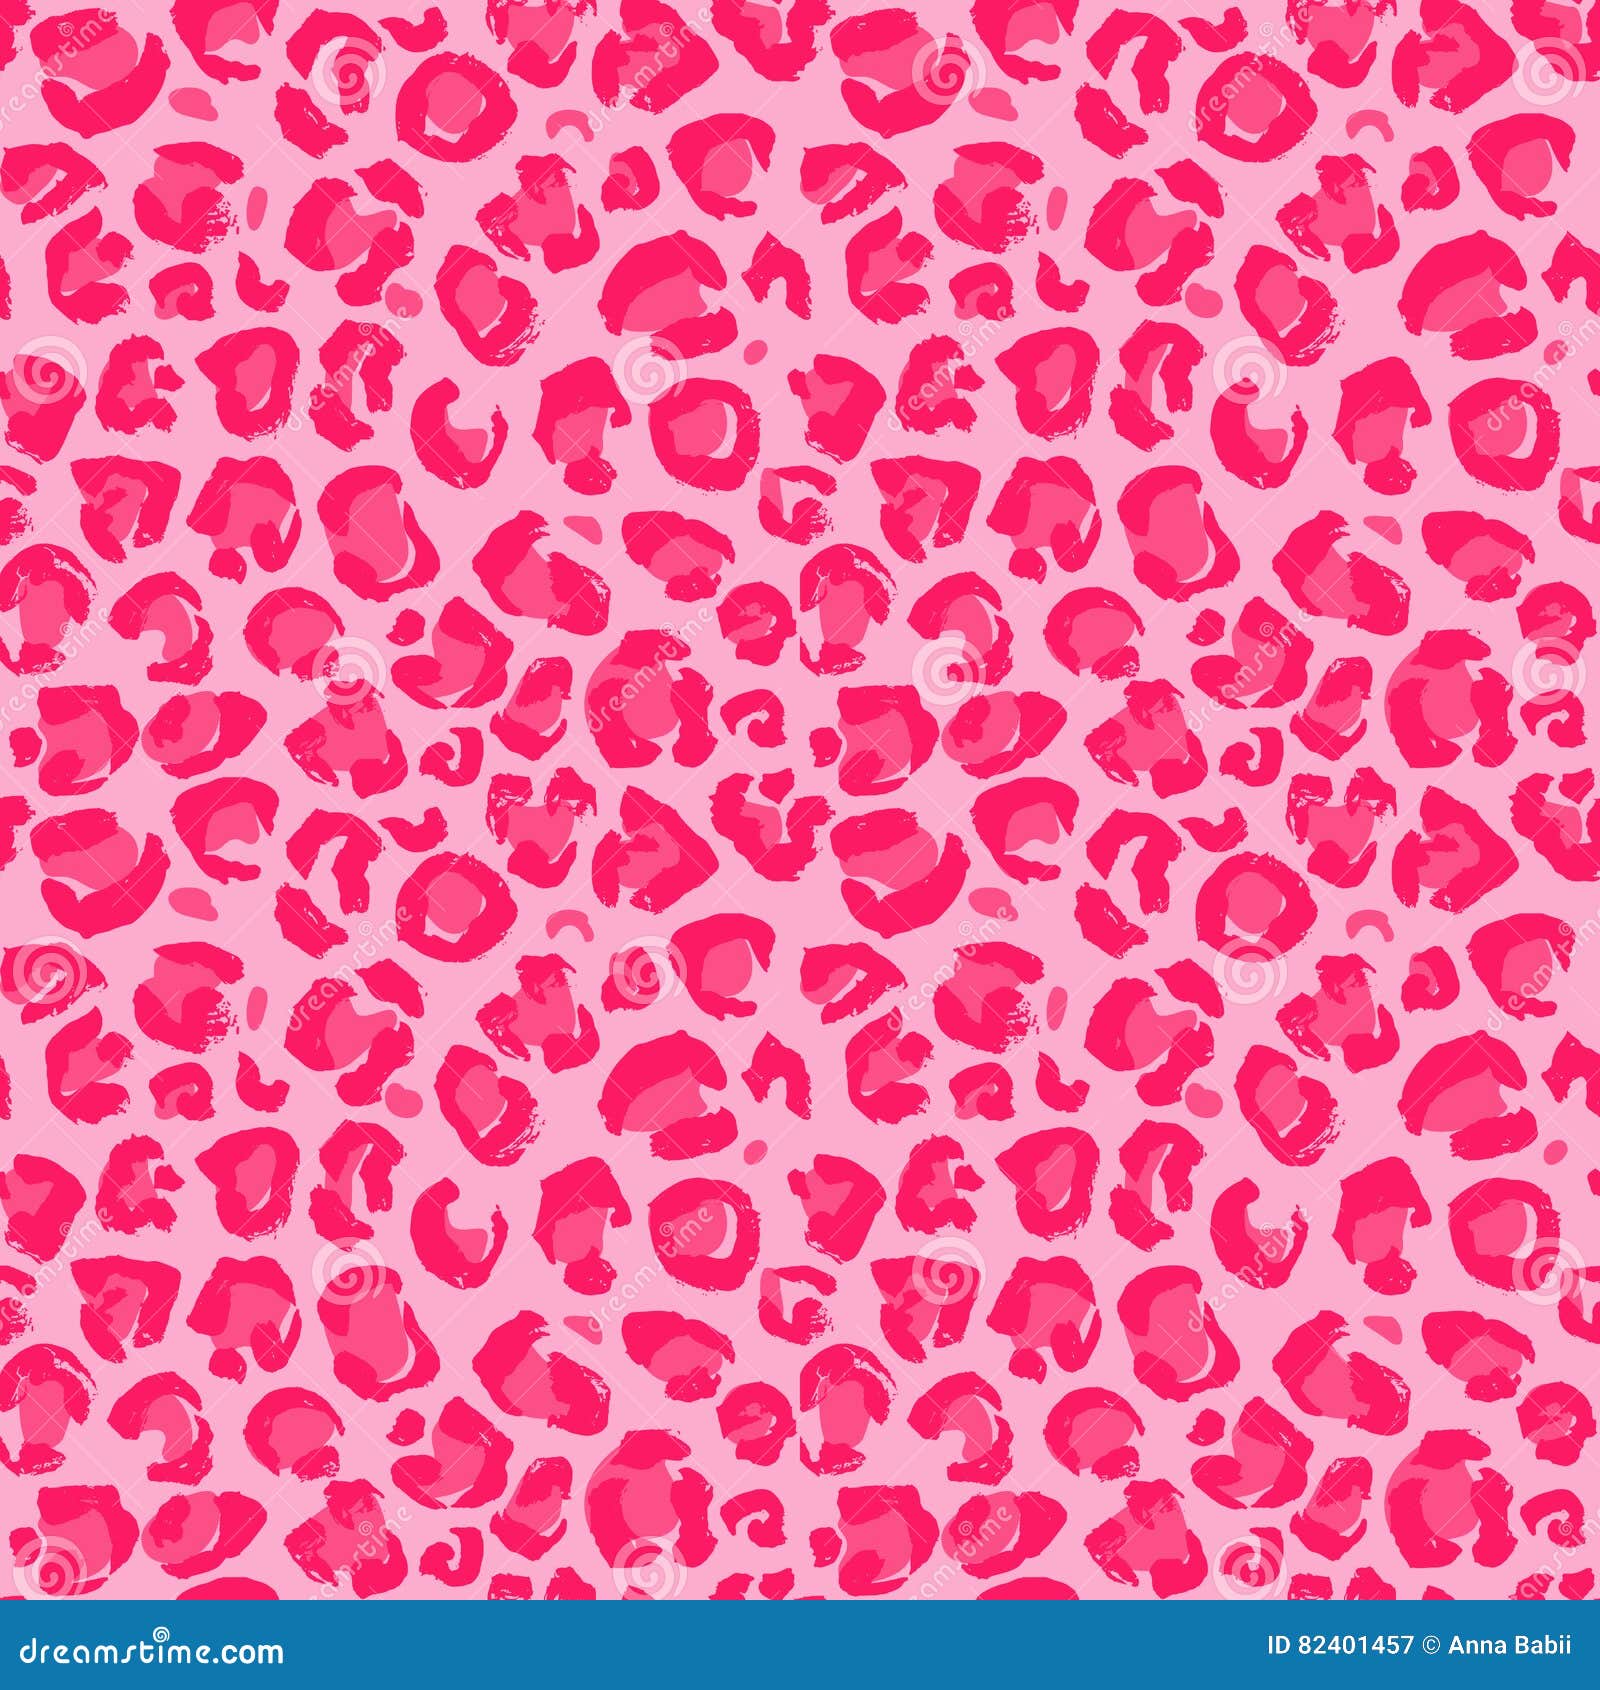 Vector Illustration Leopard Print Seamless Pattern. Pink Hand Drawn ...